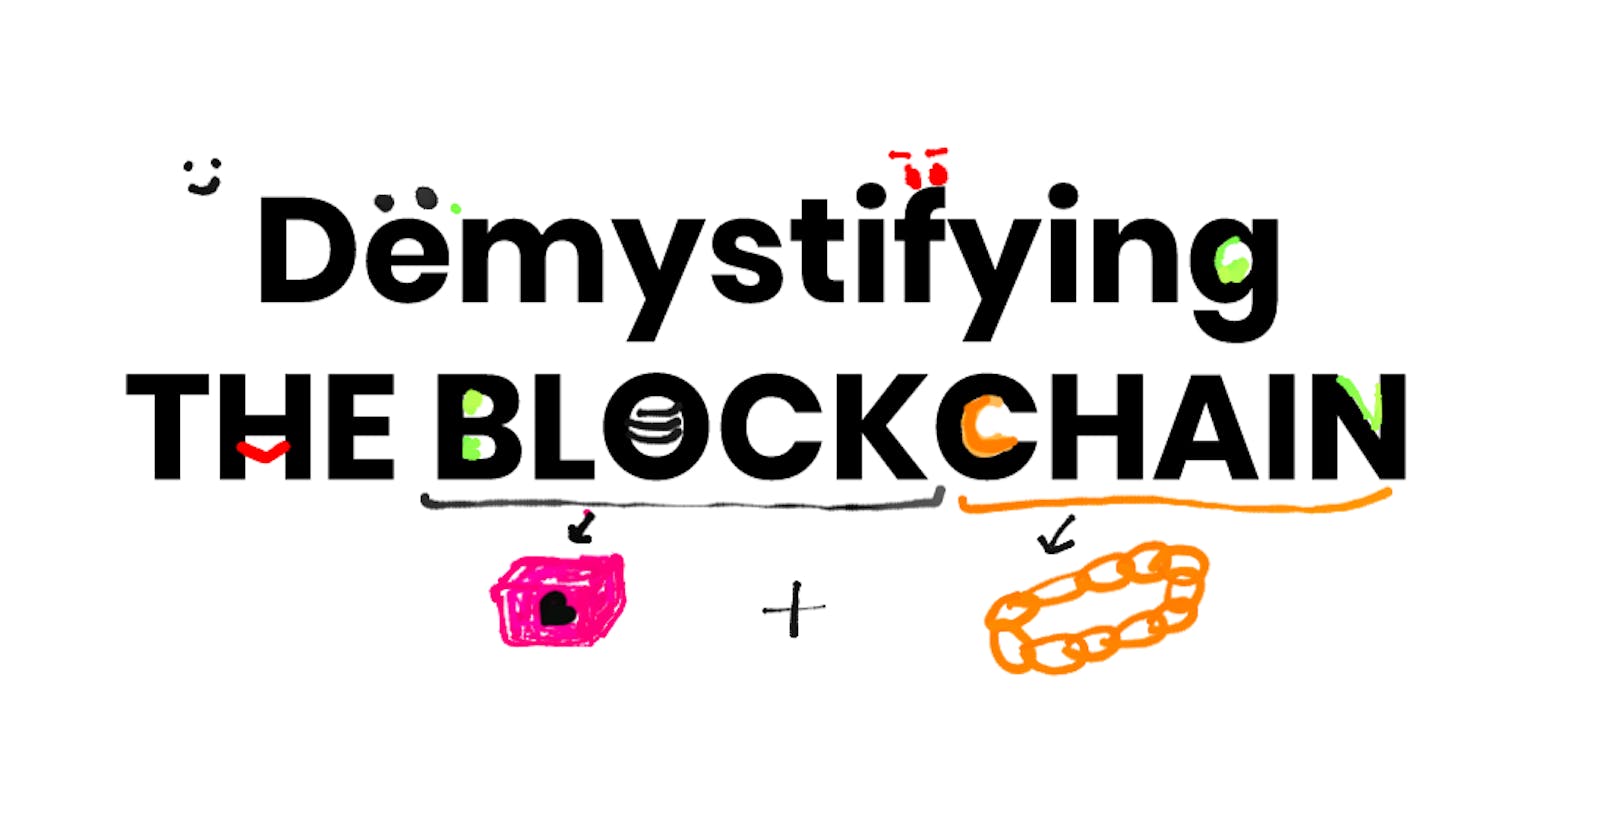 Demystifying THE "blockchain"